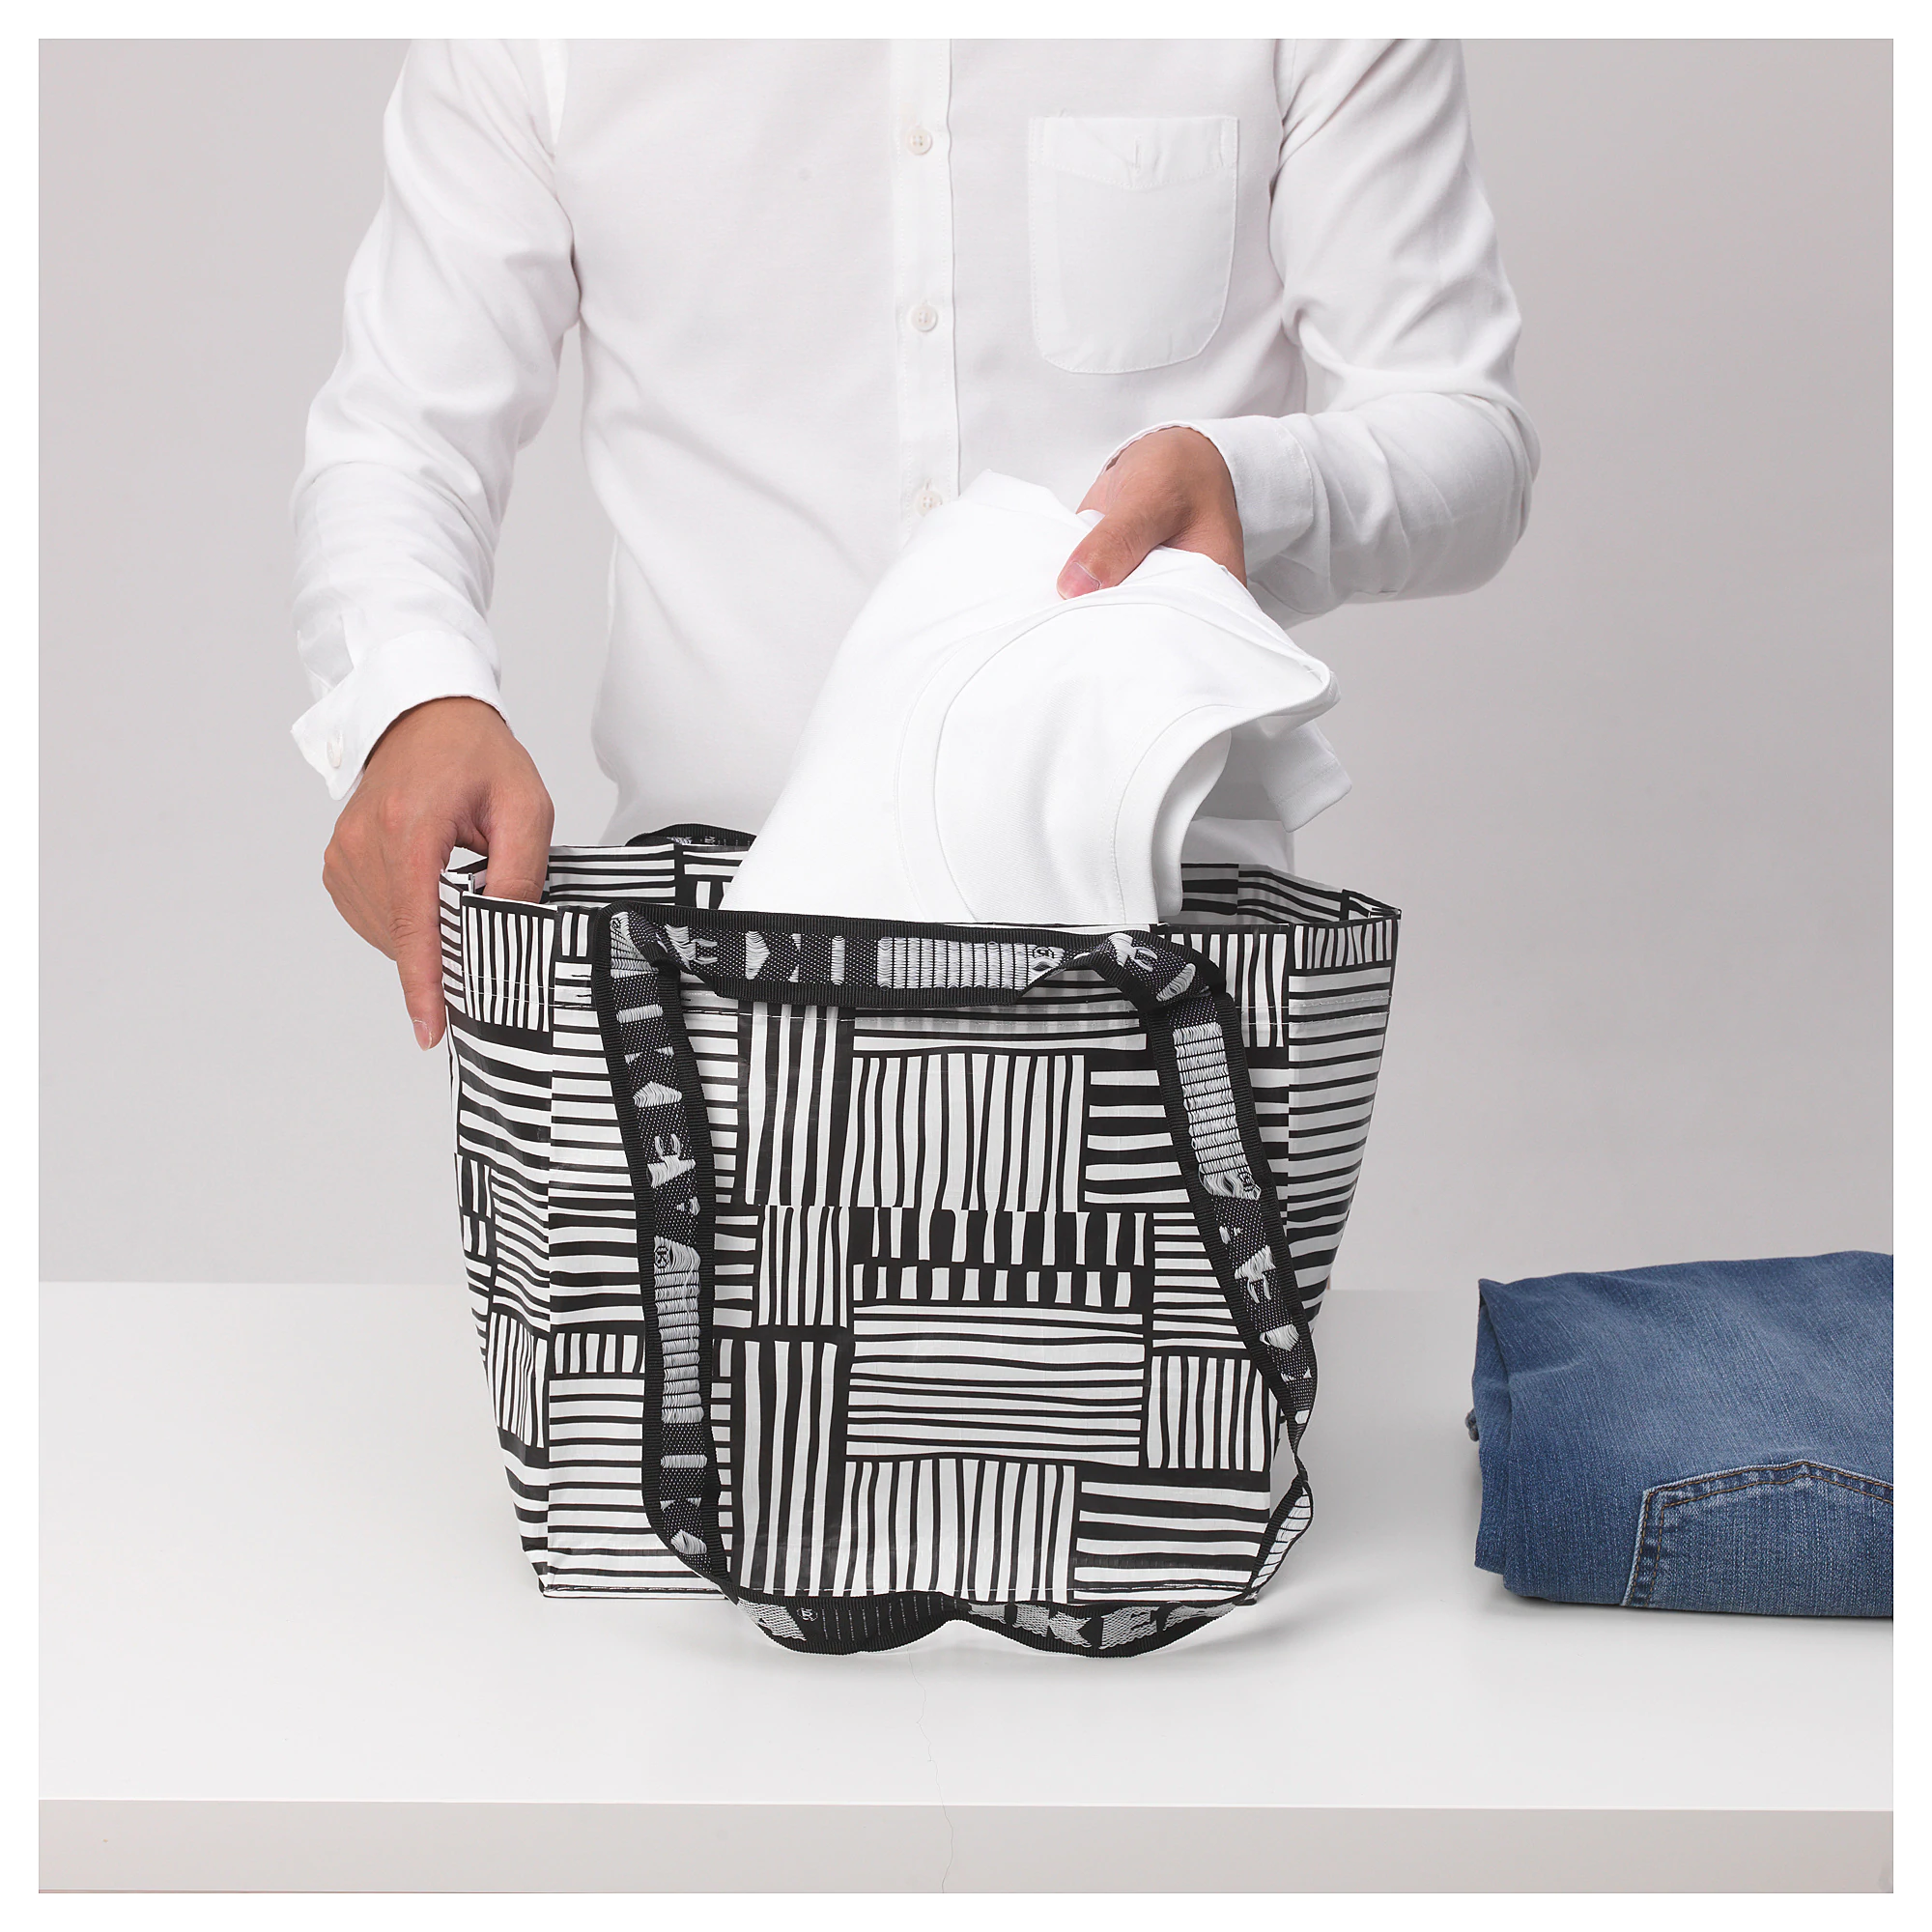 Louis Vuitton Summer 2014 Cabas bags usher in canvas season